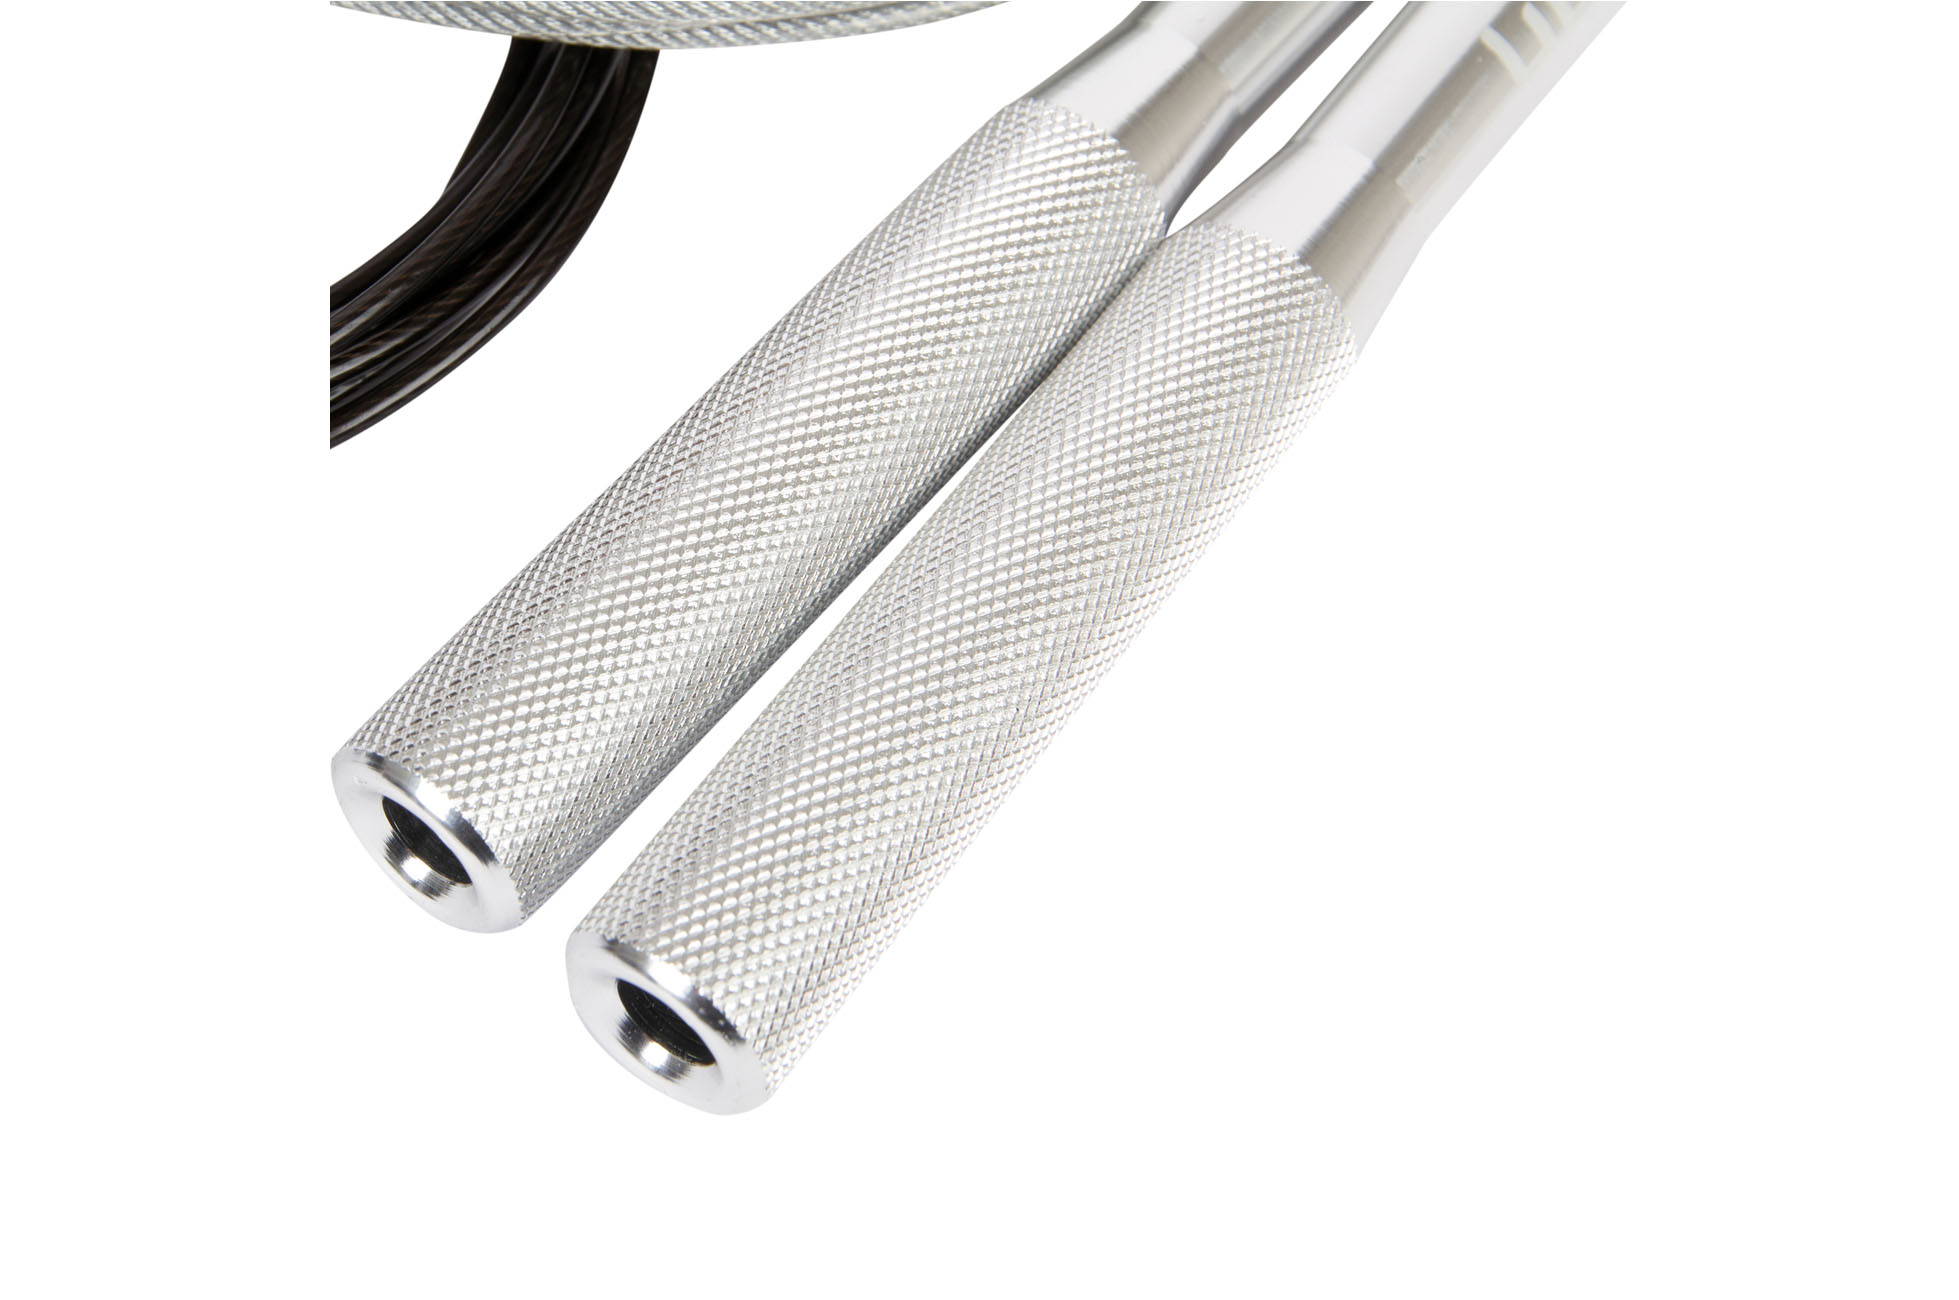 Corde a Sauter Crossfit - 3 Câbles, Poignées Aluminium, Double